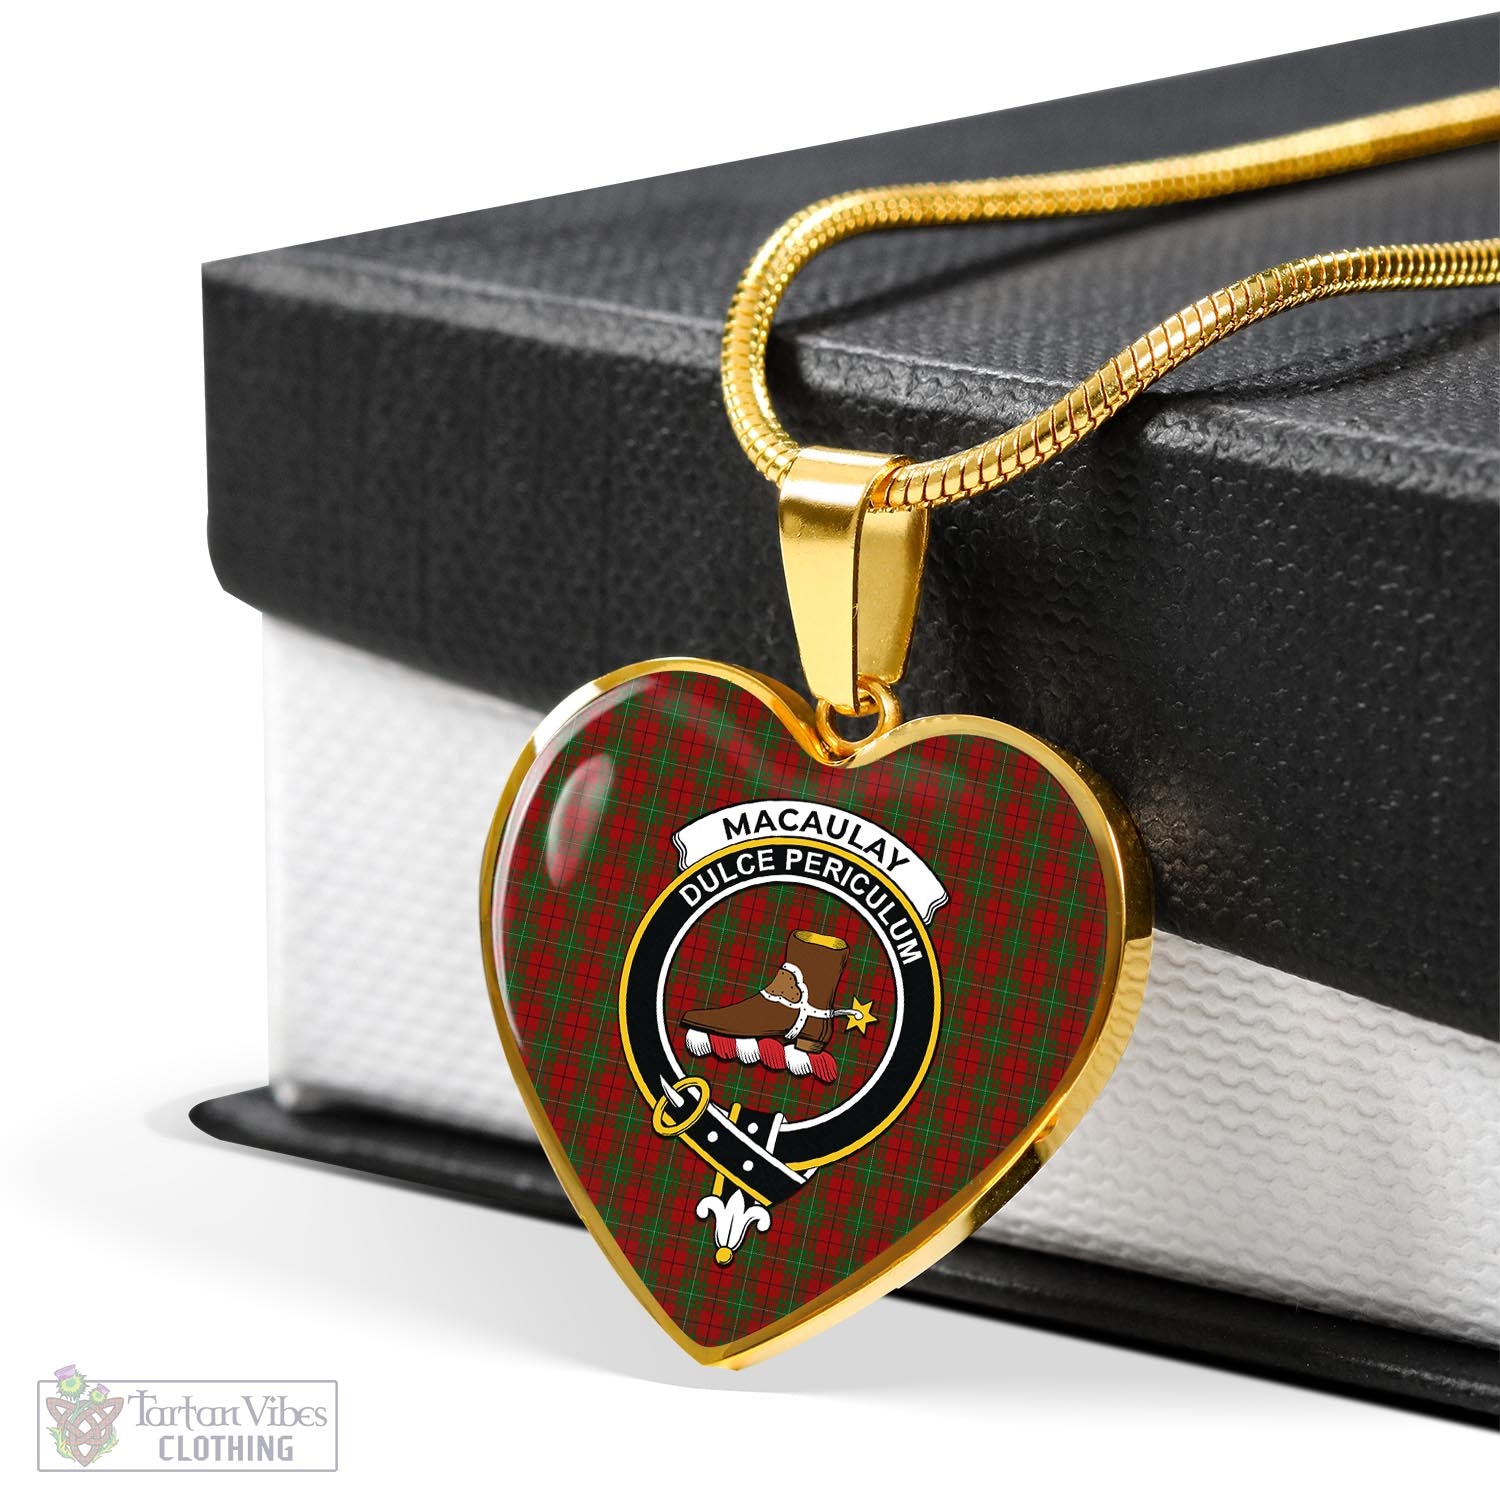 Tartan Vibes Clothing MacAulay Tartan Heart Necklace with Family Crest